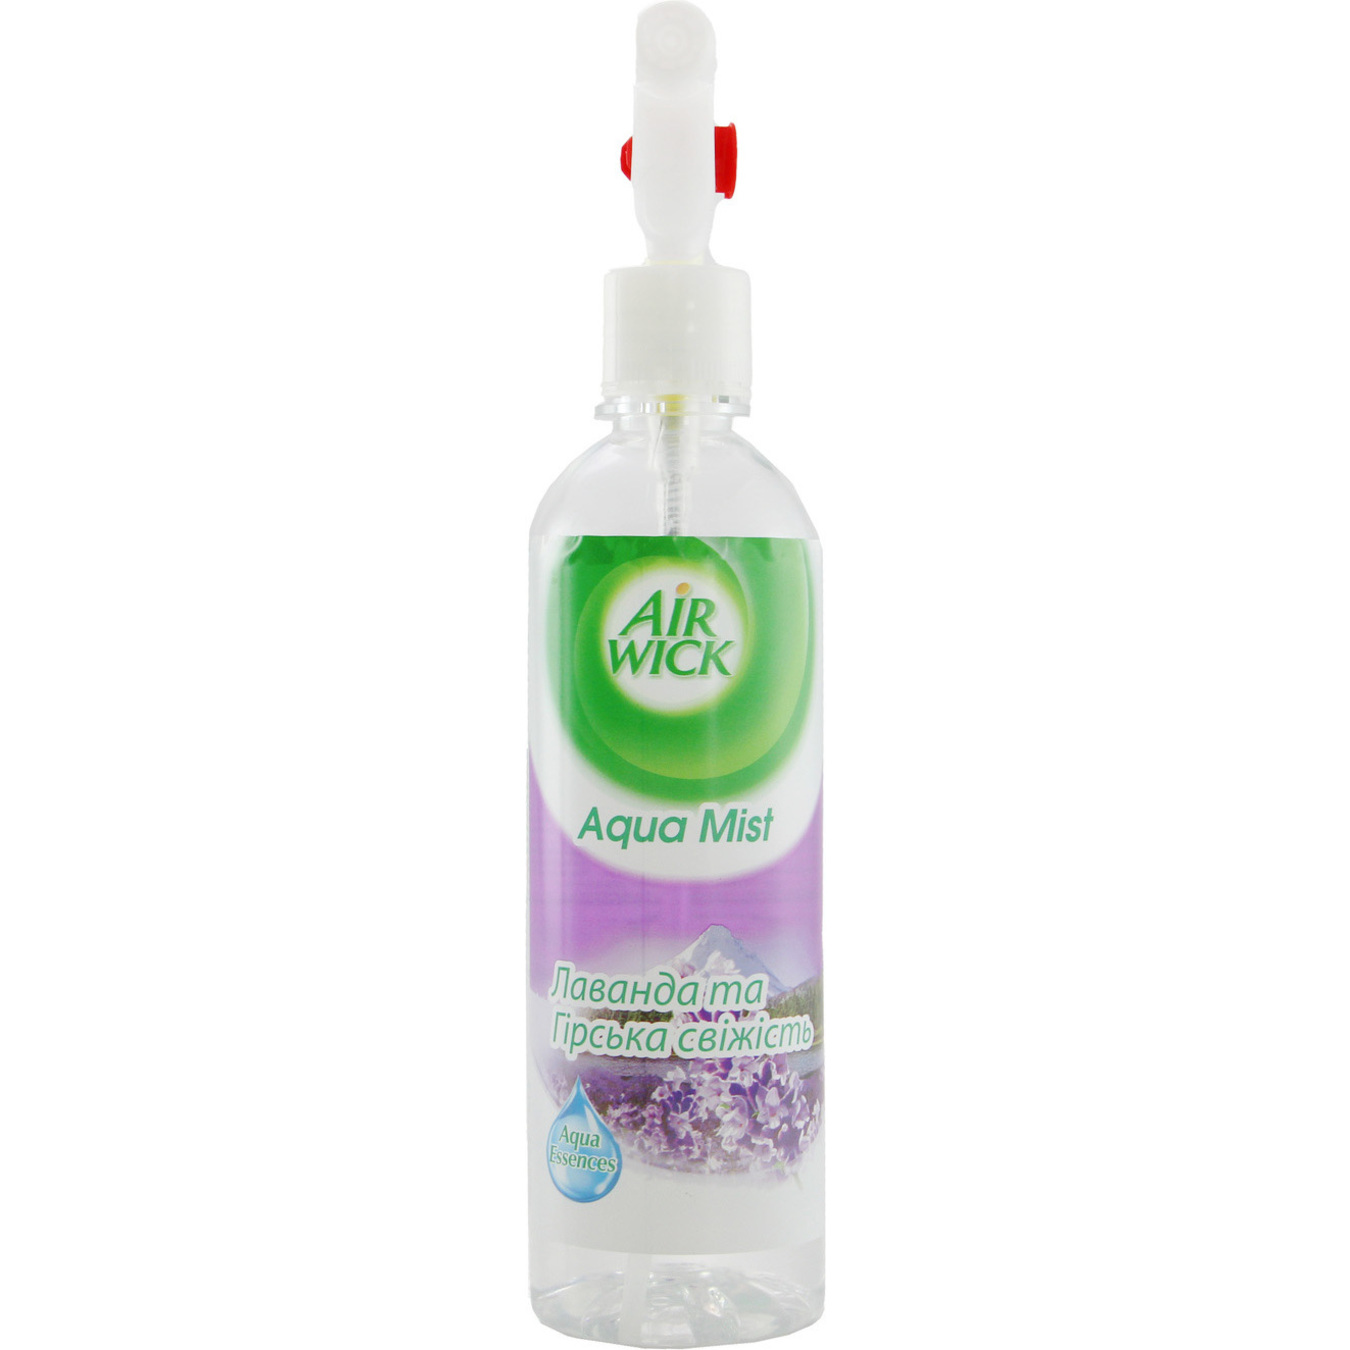 Airwick Aqua Mist lavender and mountain freshness for air spray 345ml